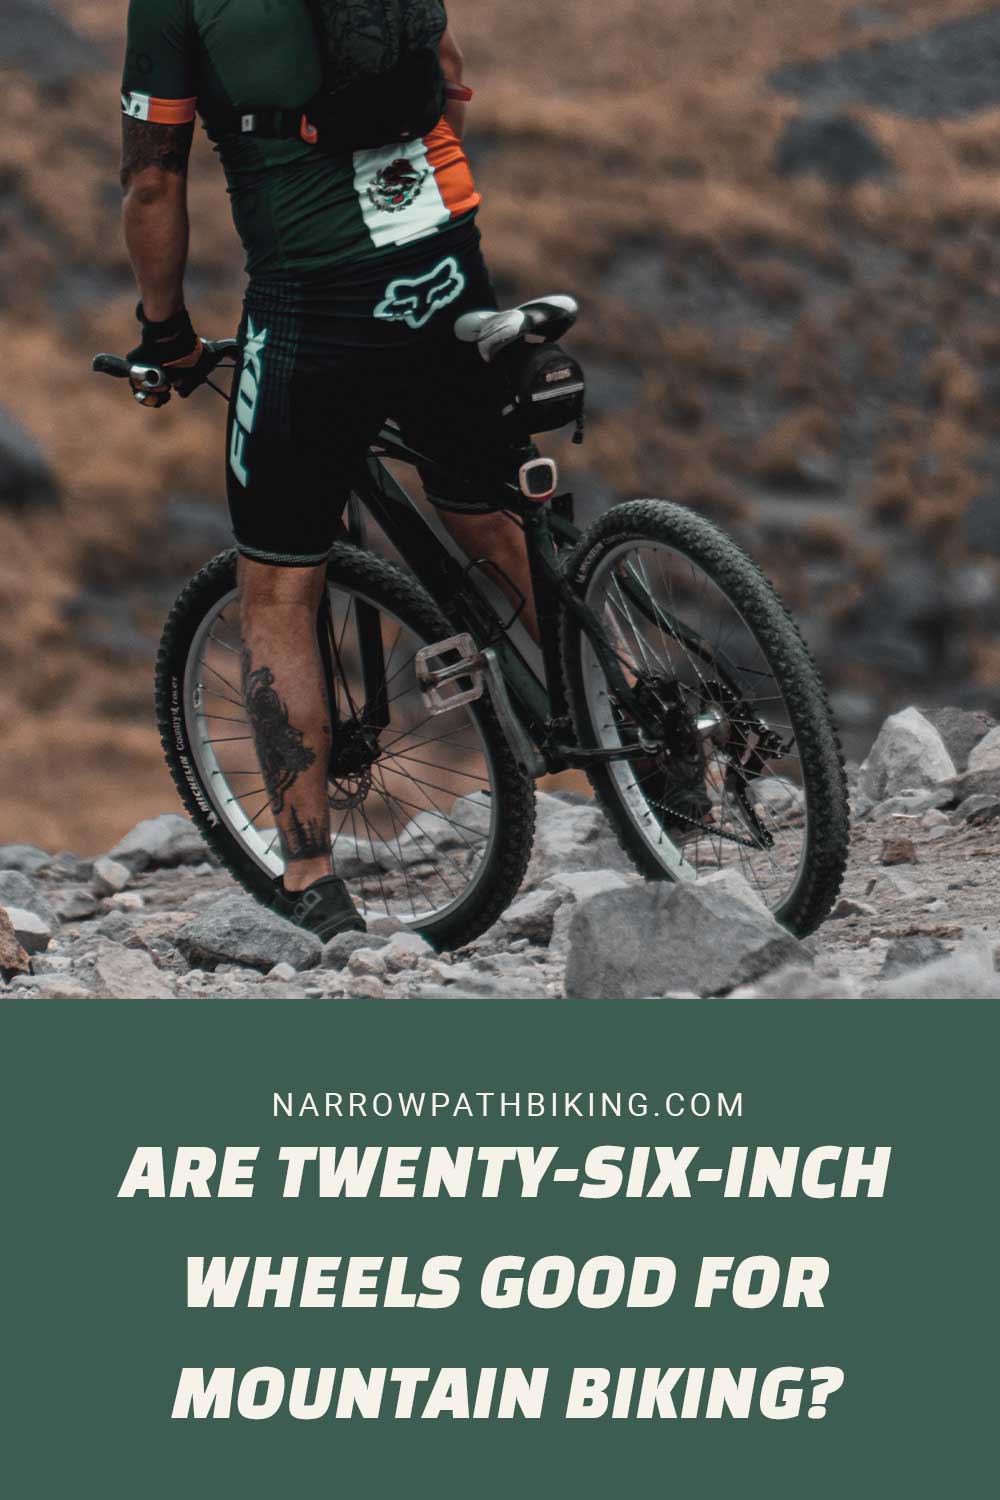 Are Twenty-Six-Inch Wheels Good For Mountain Biking?